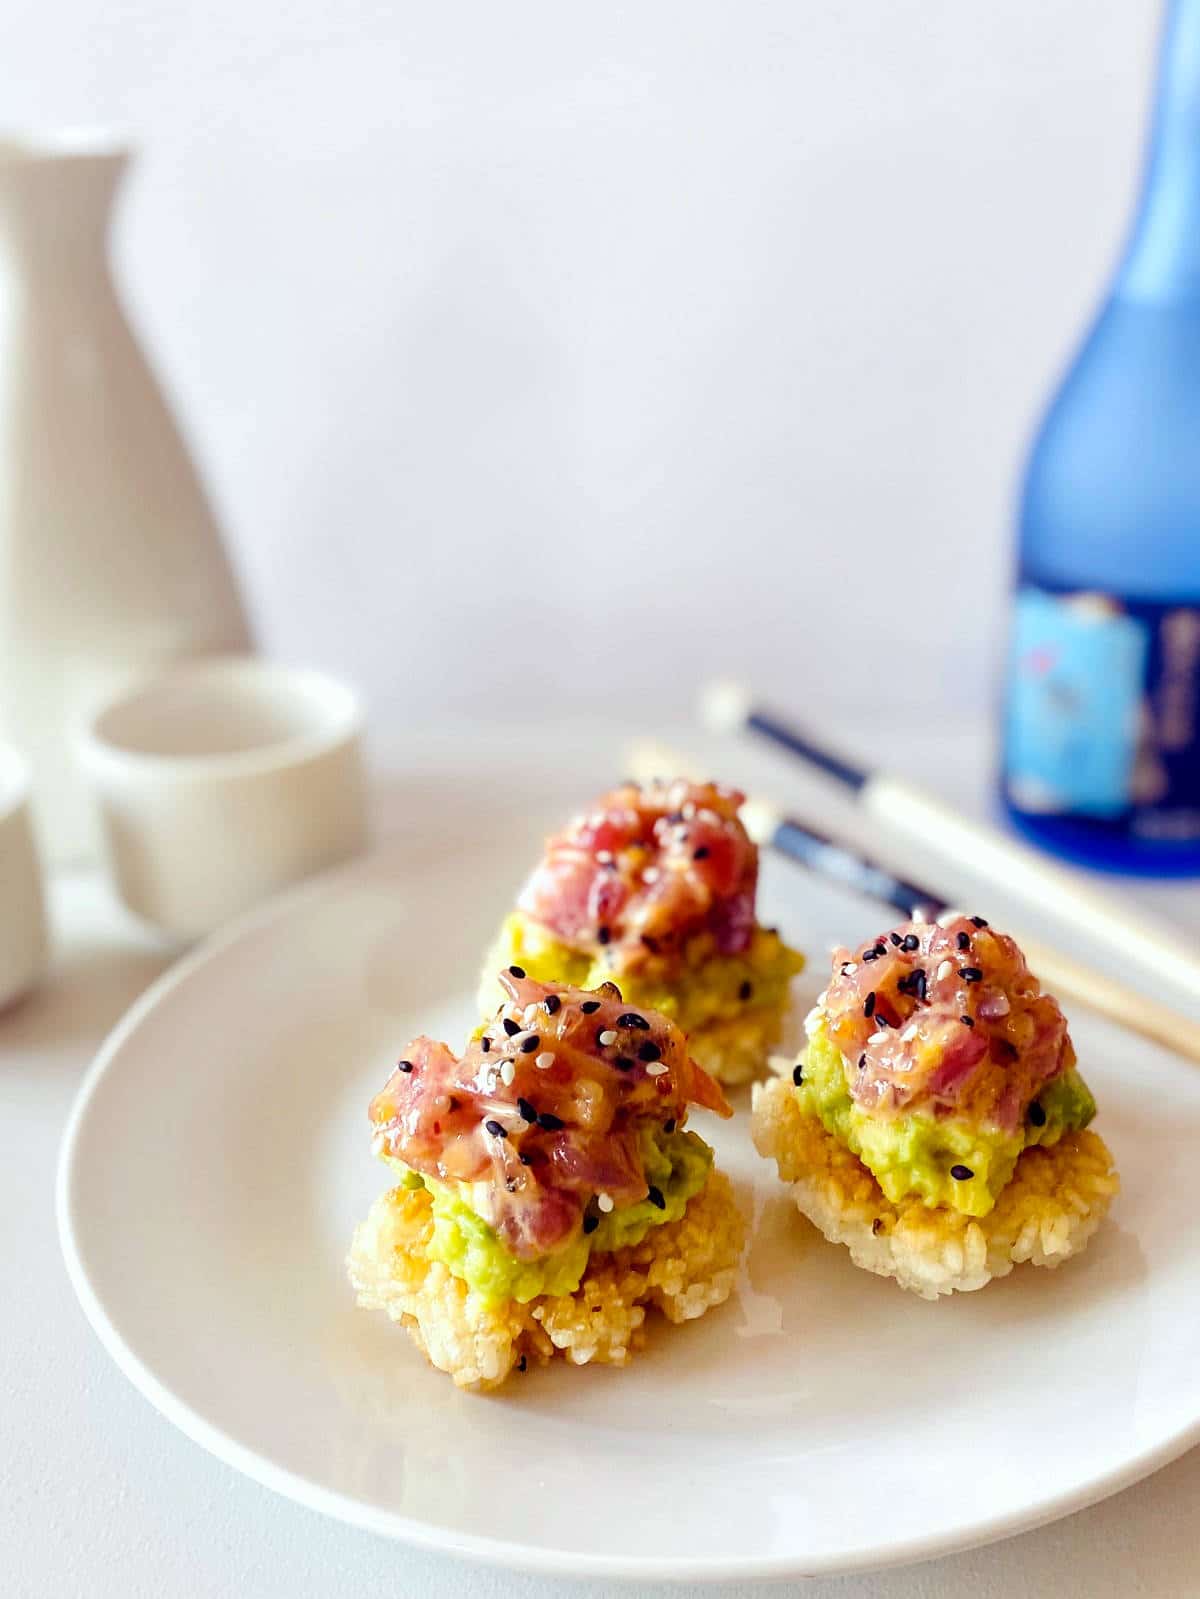 spicy tuna crispy rice on plate next to chopsticks, sake and sake carafe and glasses